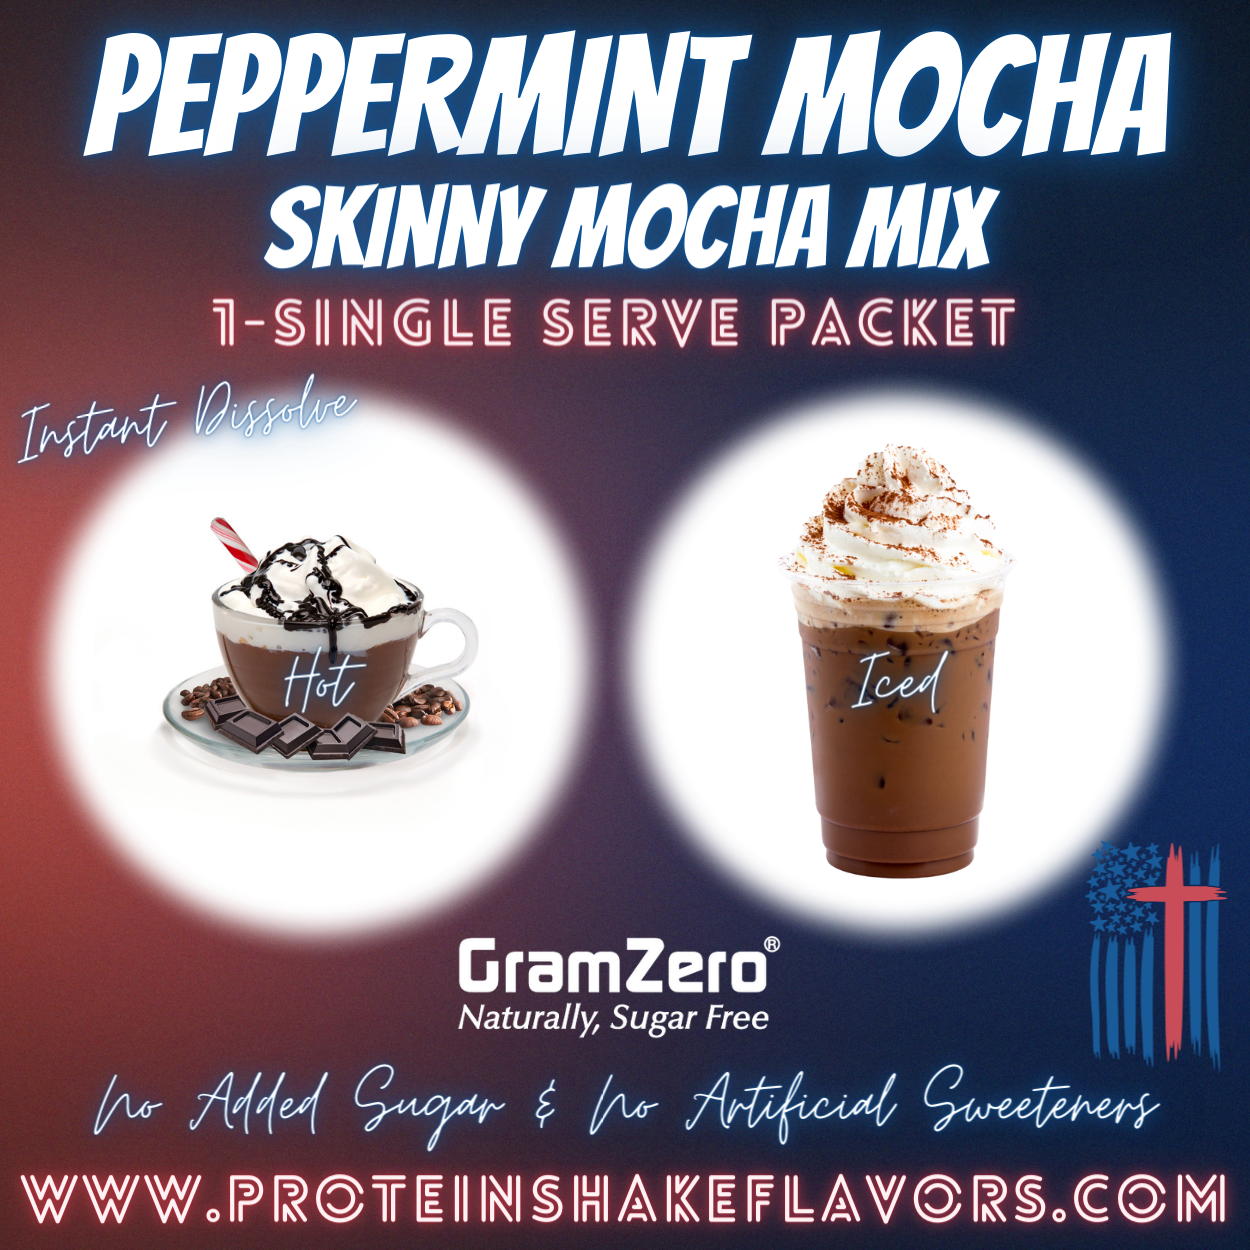 Skinny PEPPERMINT MOCHA Mix ☕ Instant Mocha Drink Hot or Iced